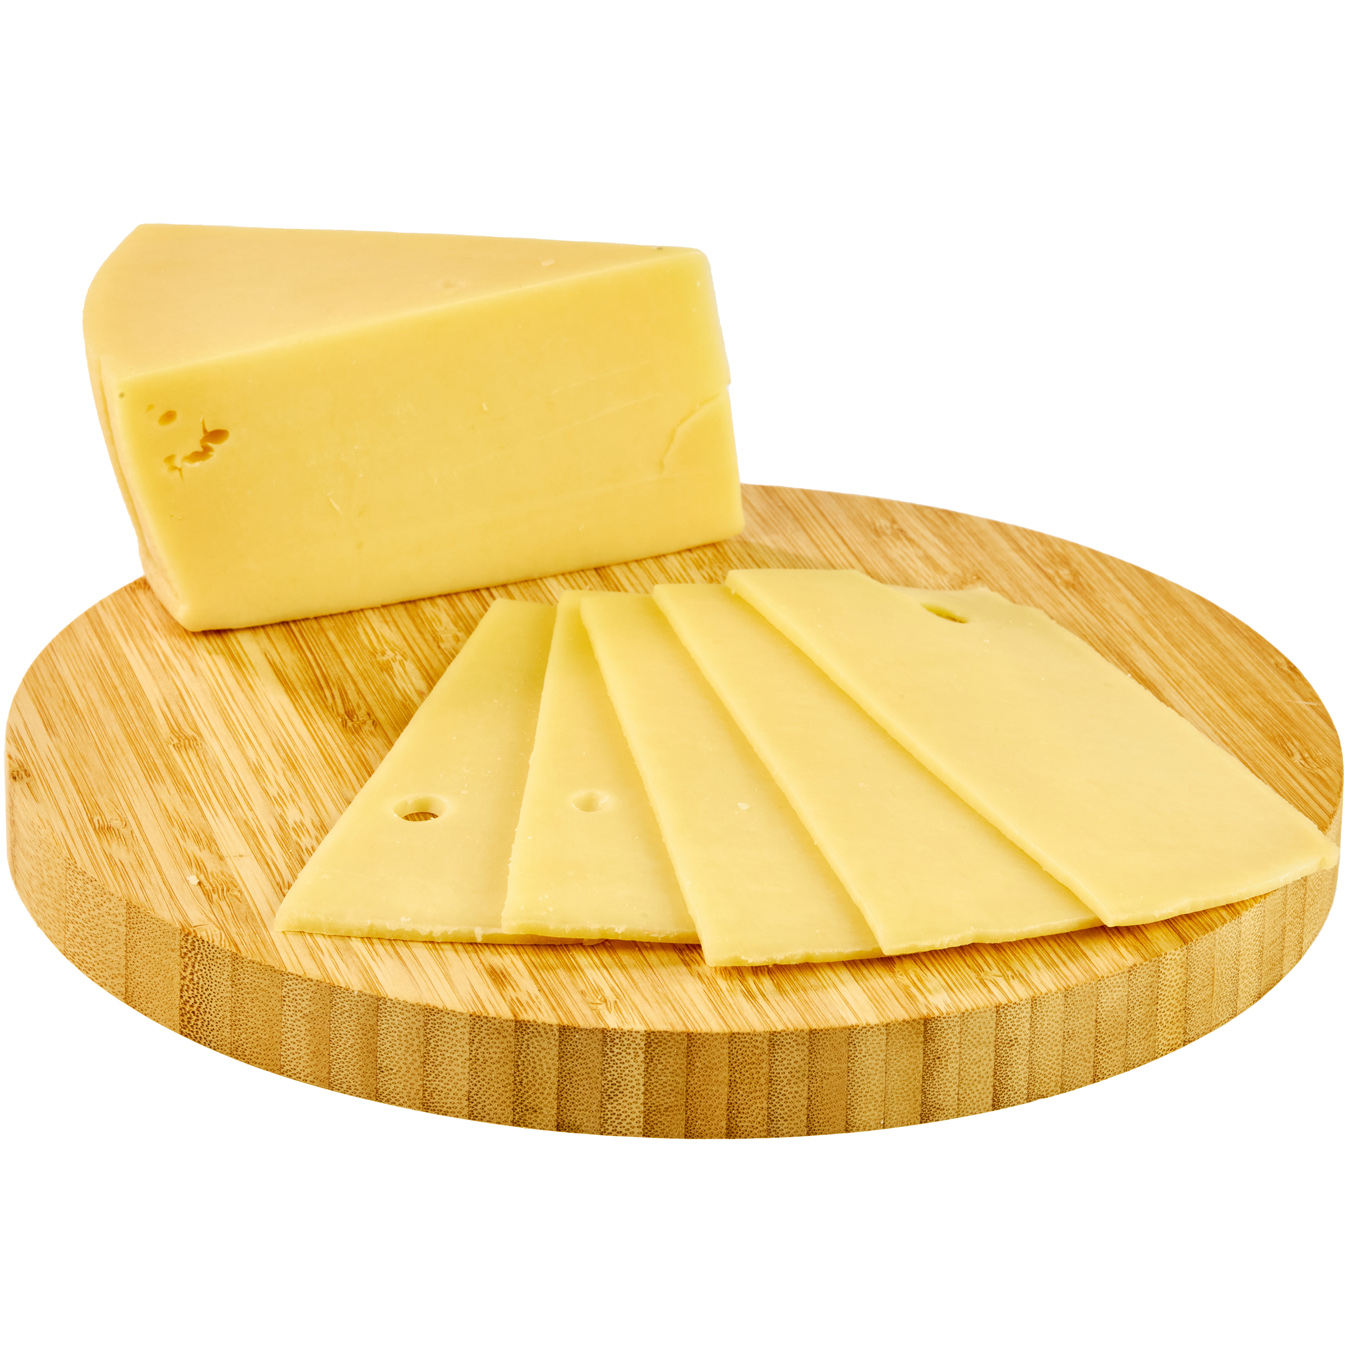 Cheese Starokozatske Gruver 45%